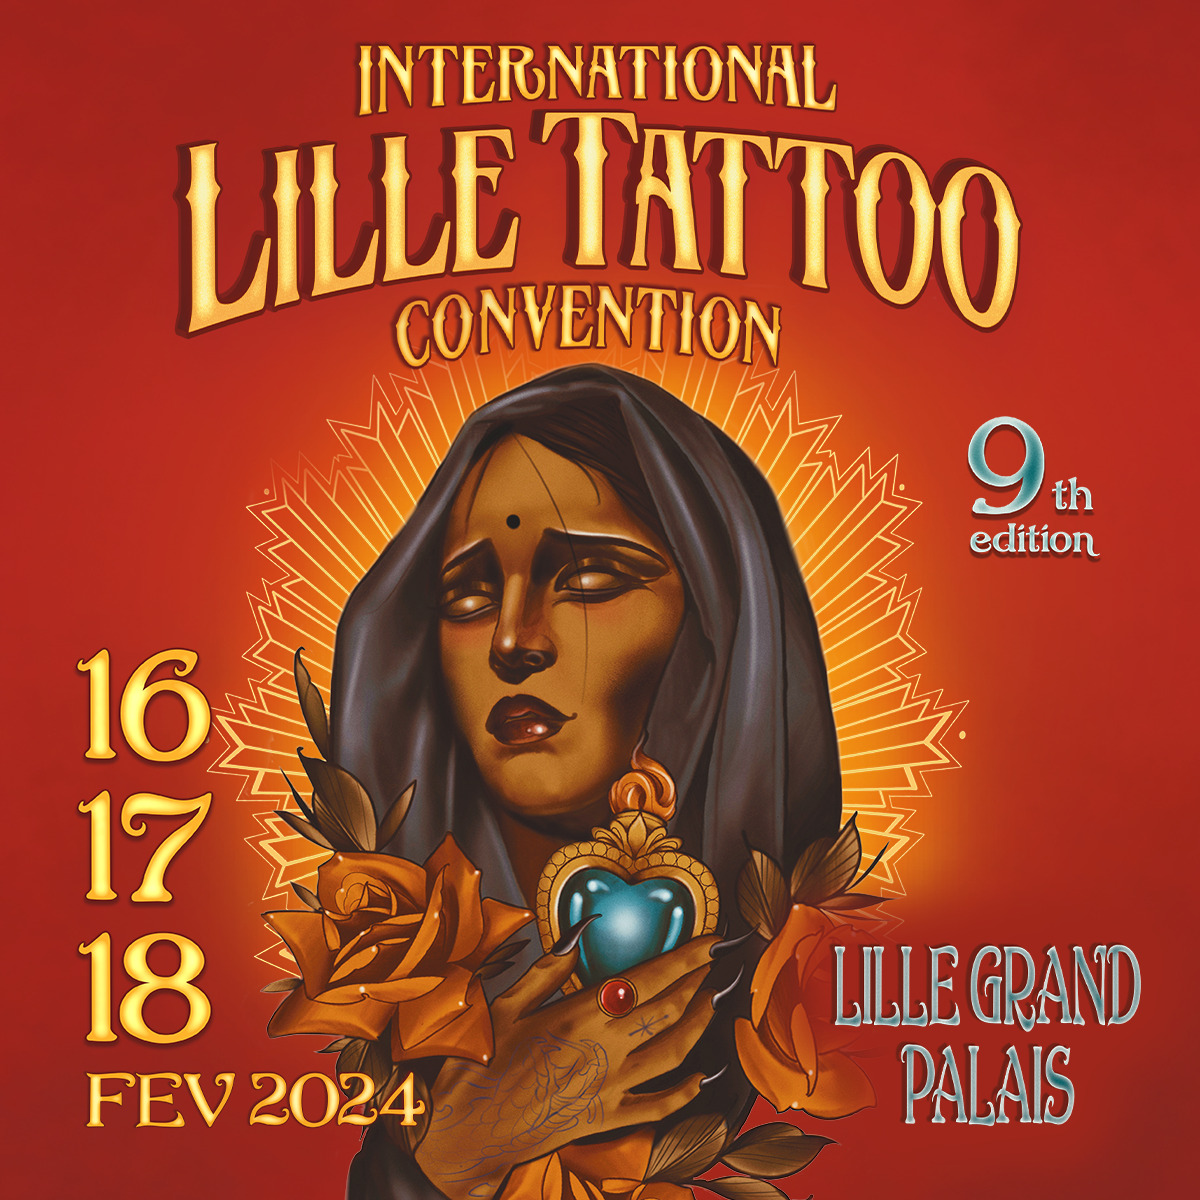 International Lille Tattoo Convention